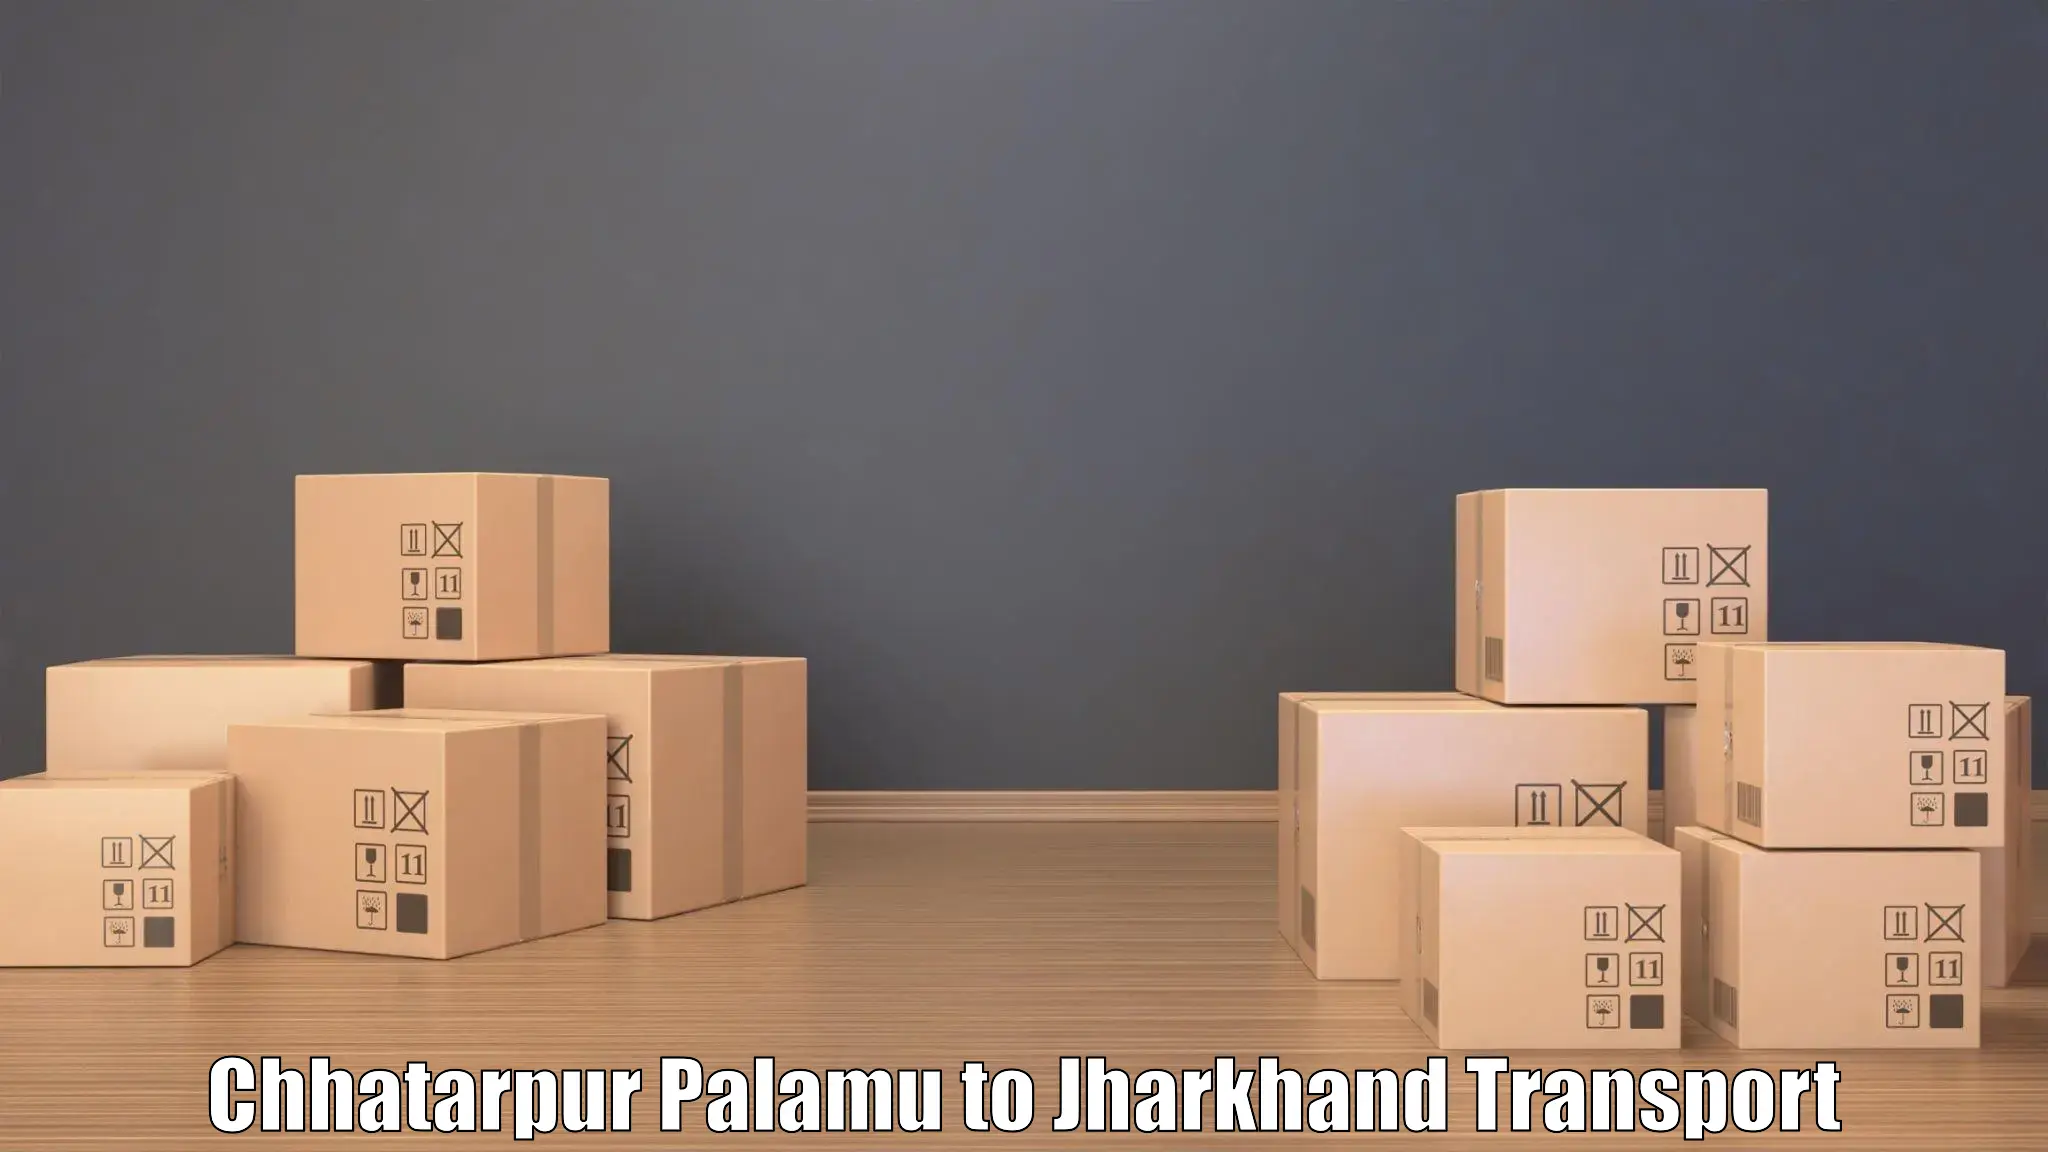 Truck transport companies in India Chhatarpur Palamu to Chhatarpur Palamu